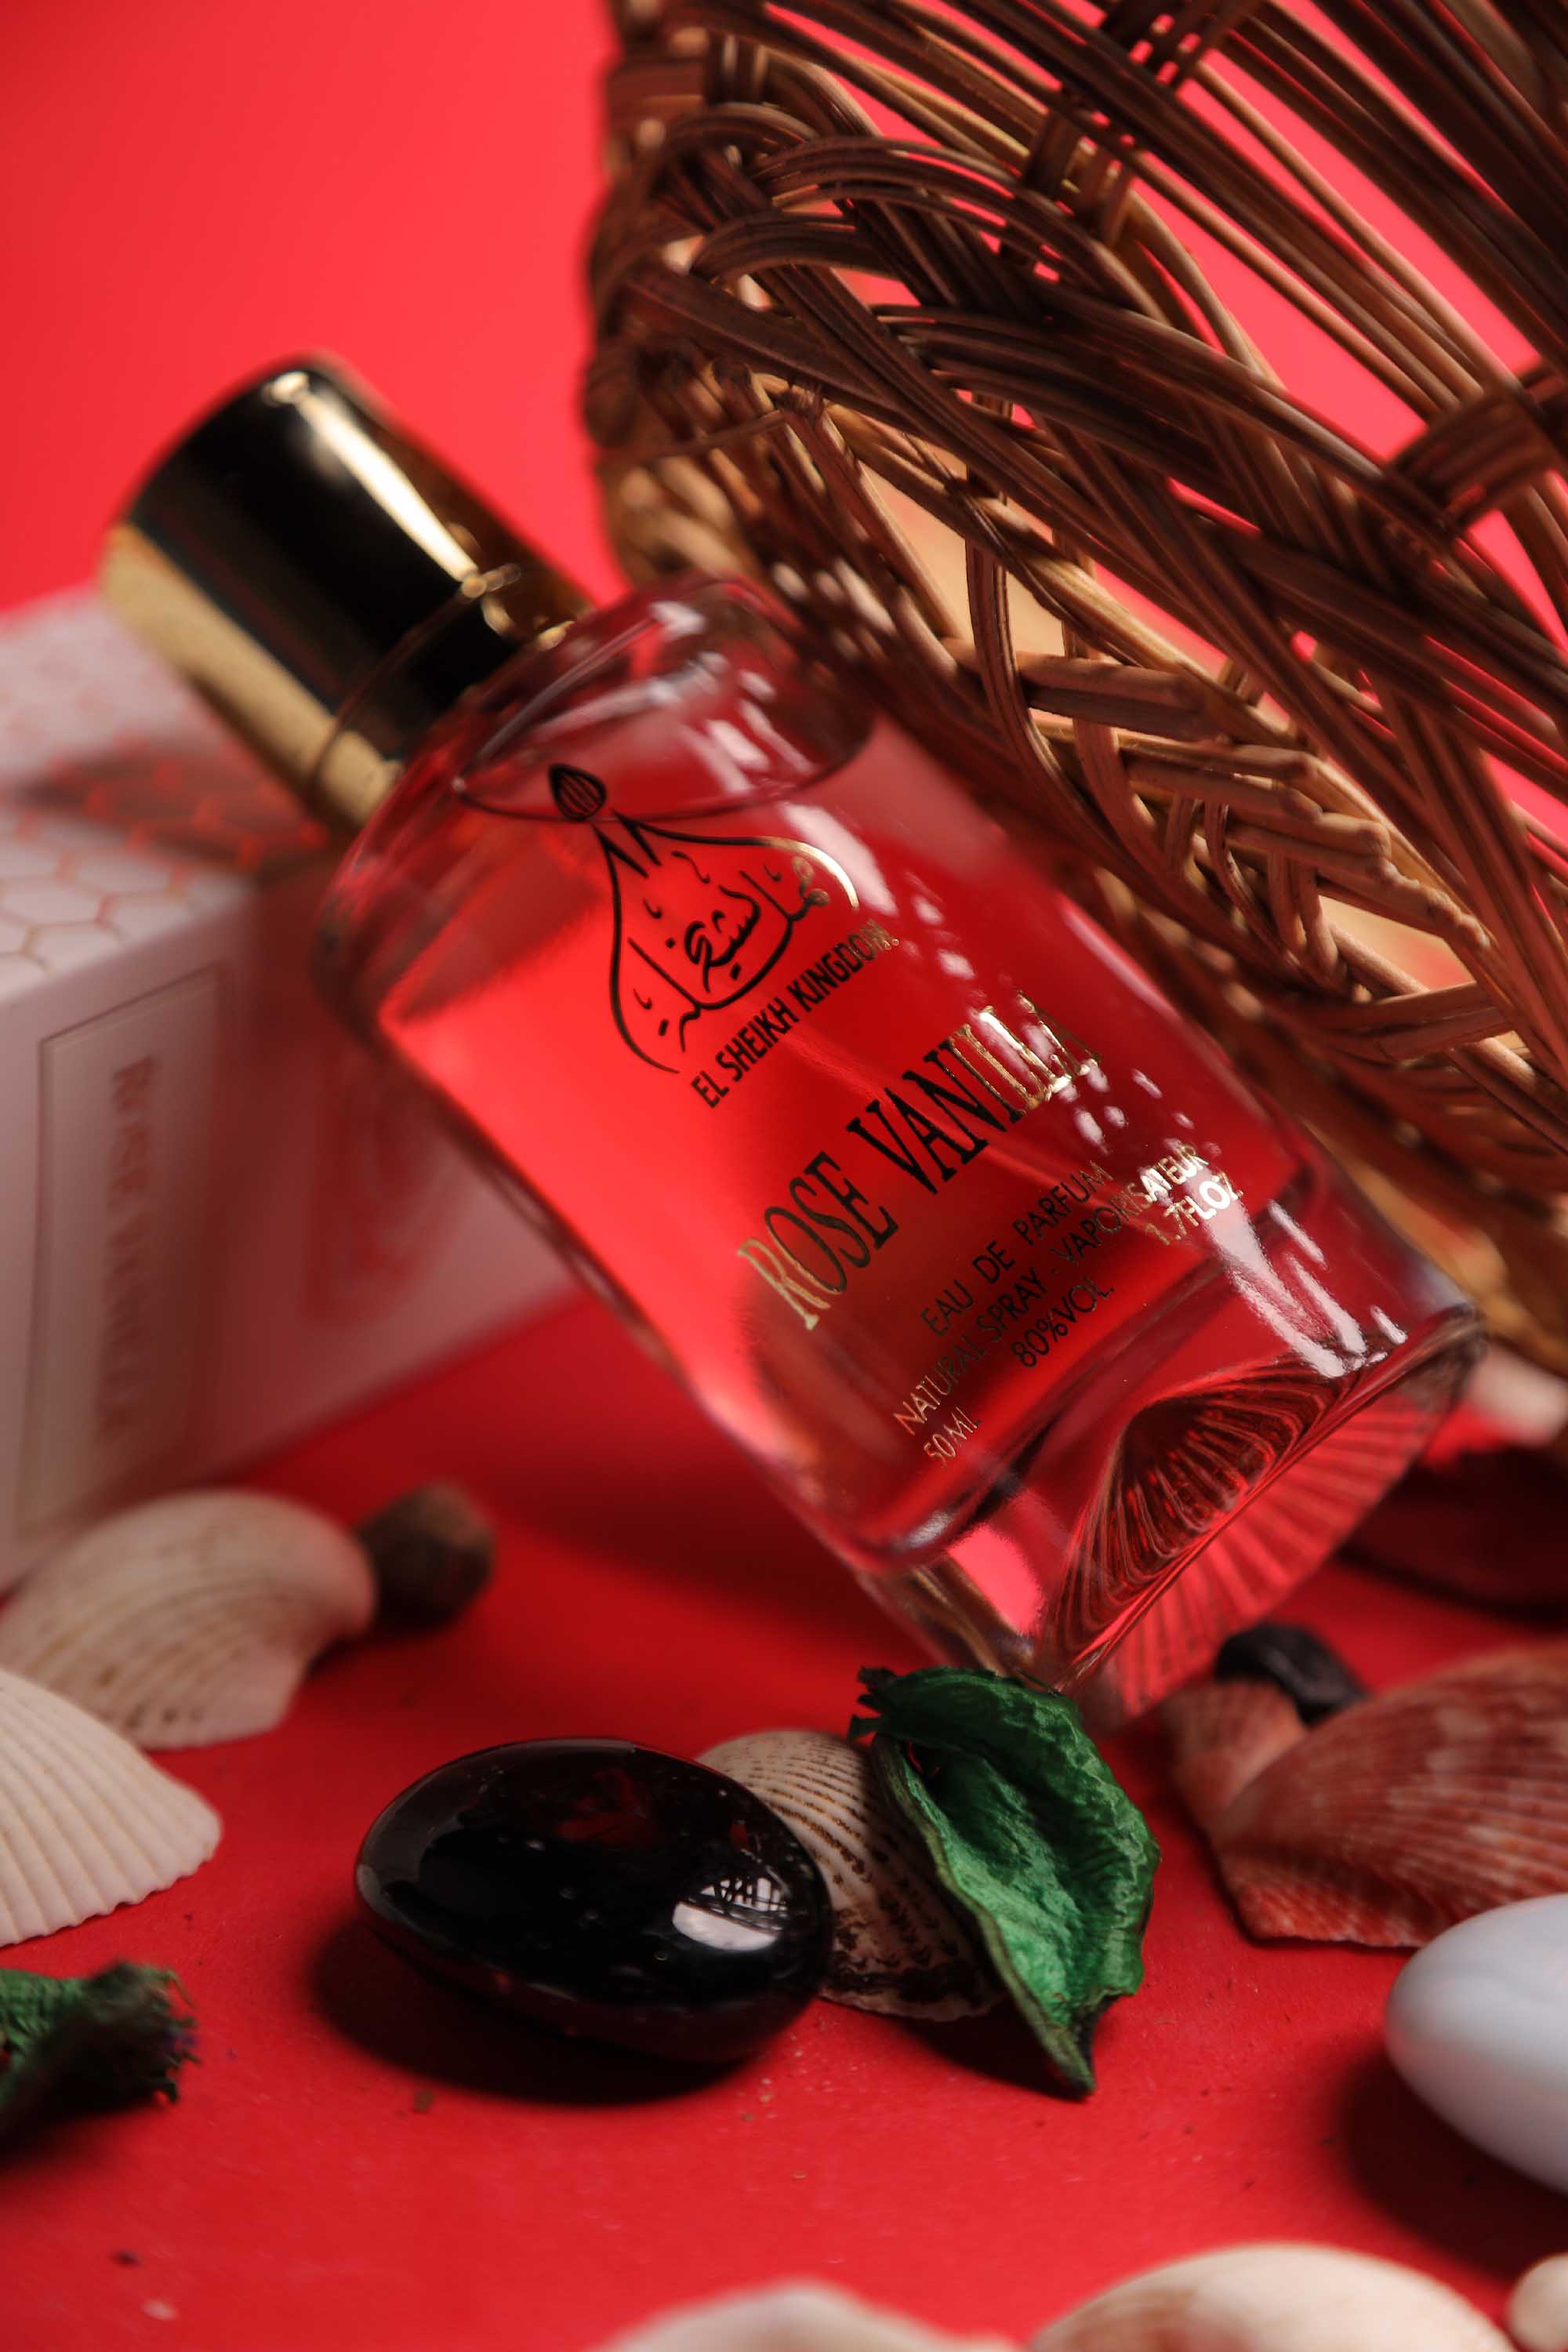 Discover the Essence of Luxury: Rose Vanilla Perfume at Mamlaket 